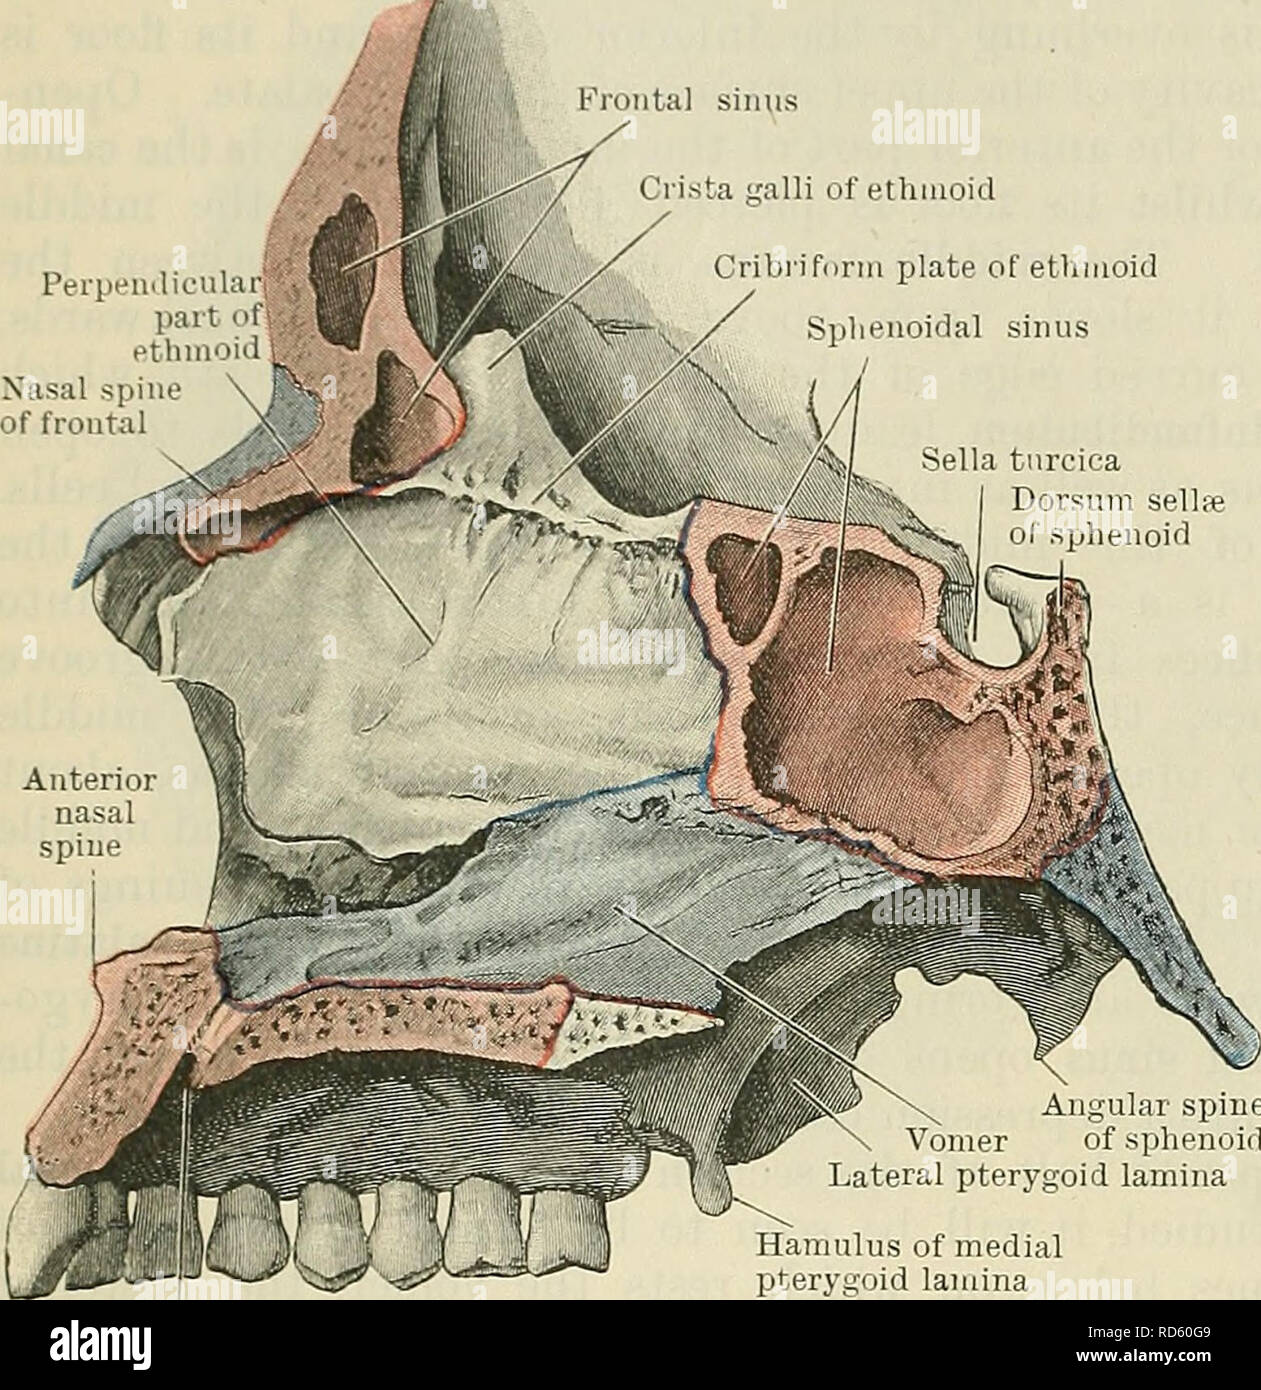 Cunningham's Text-book of anatomy. Anatomy. 186 OSTEOLOGY. Perpeiii Frontal  sinus / Crista galli of ethmoid Cribriform plate of ethmoid Sphenoidal  sinus Sella turcica Dorsum sellre of sphenoid The sinus in the